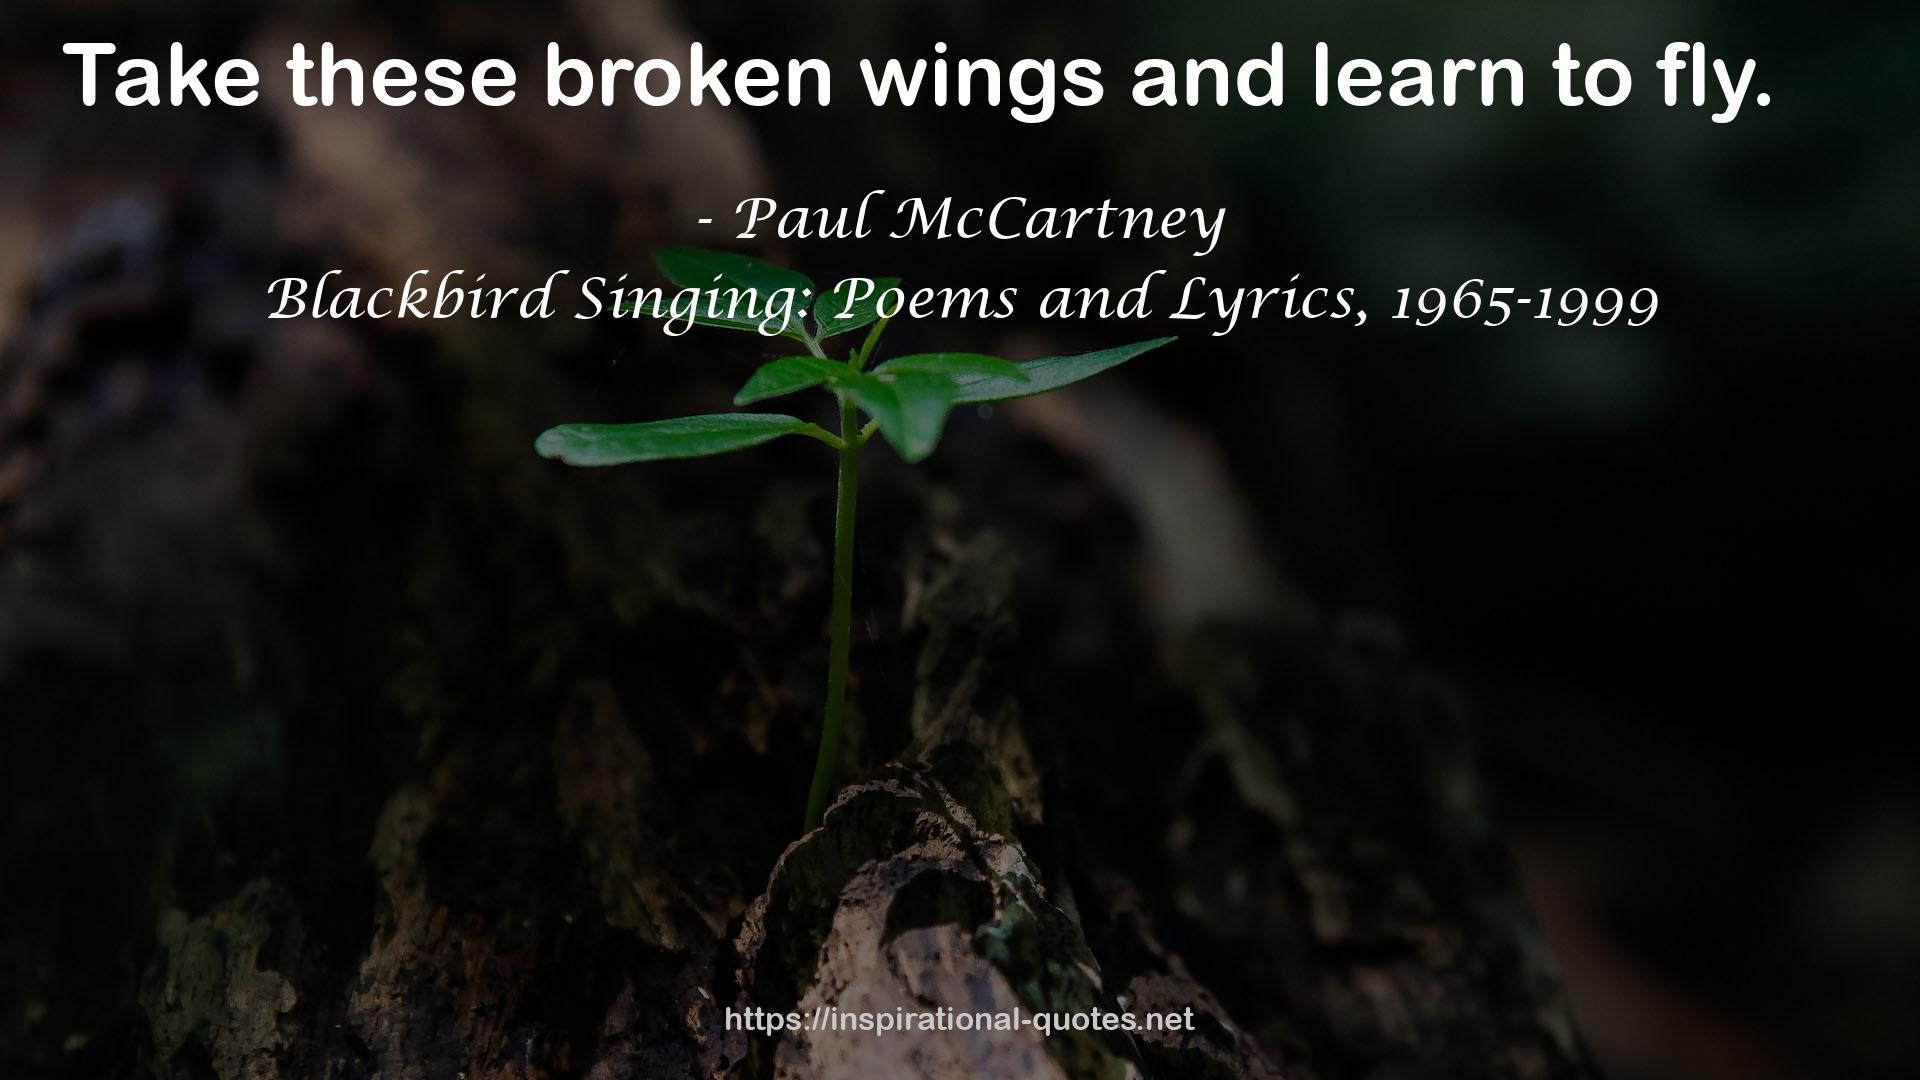 Blackbird Singing: Poems and Lyrics, 1965-1999 QUOTES